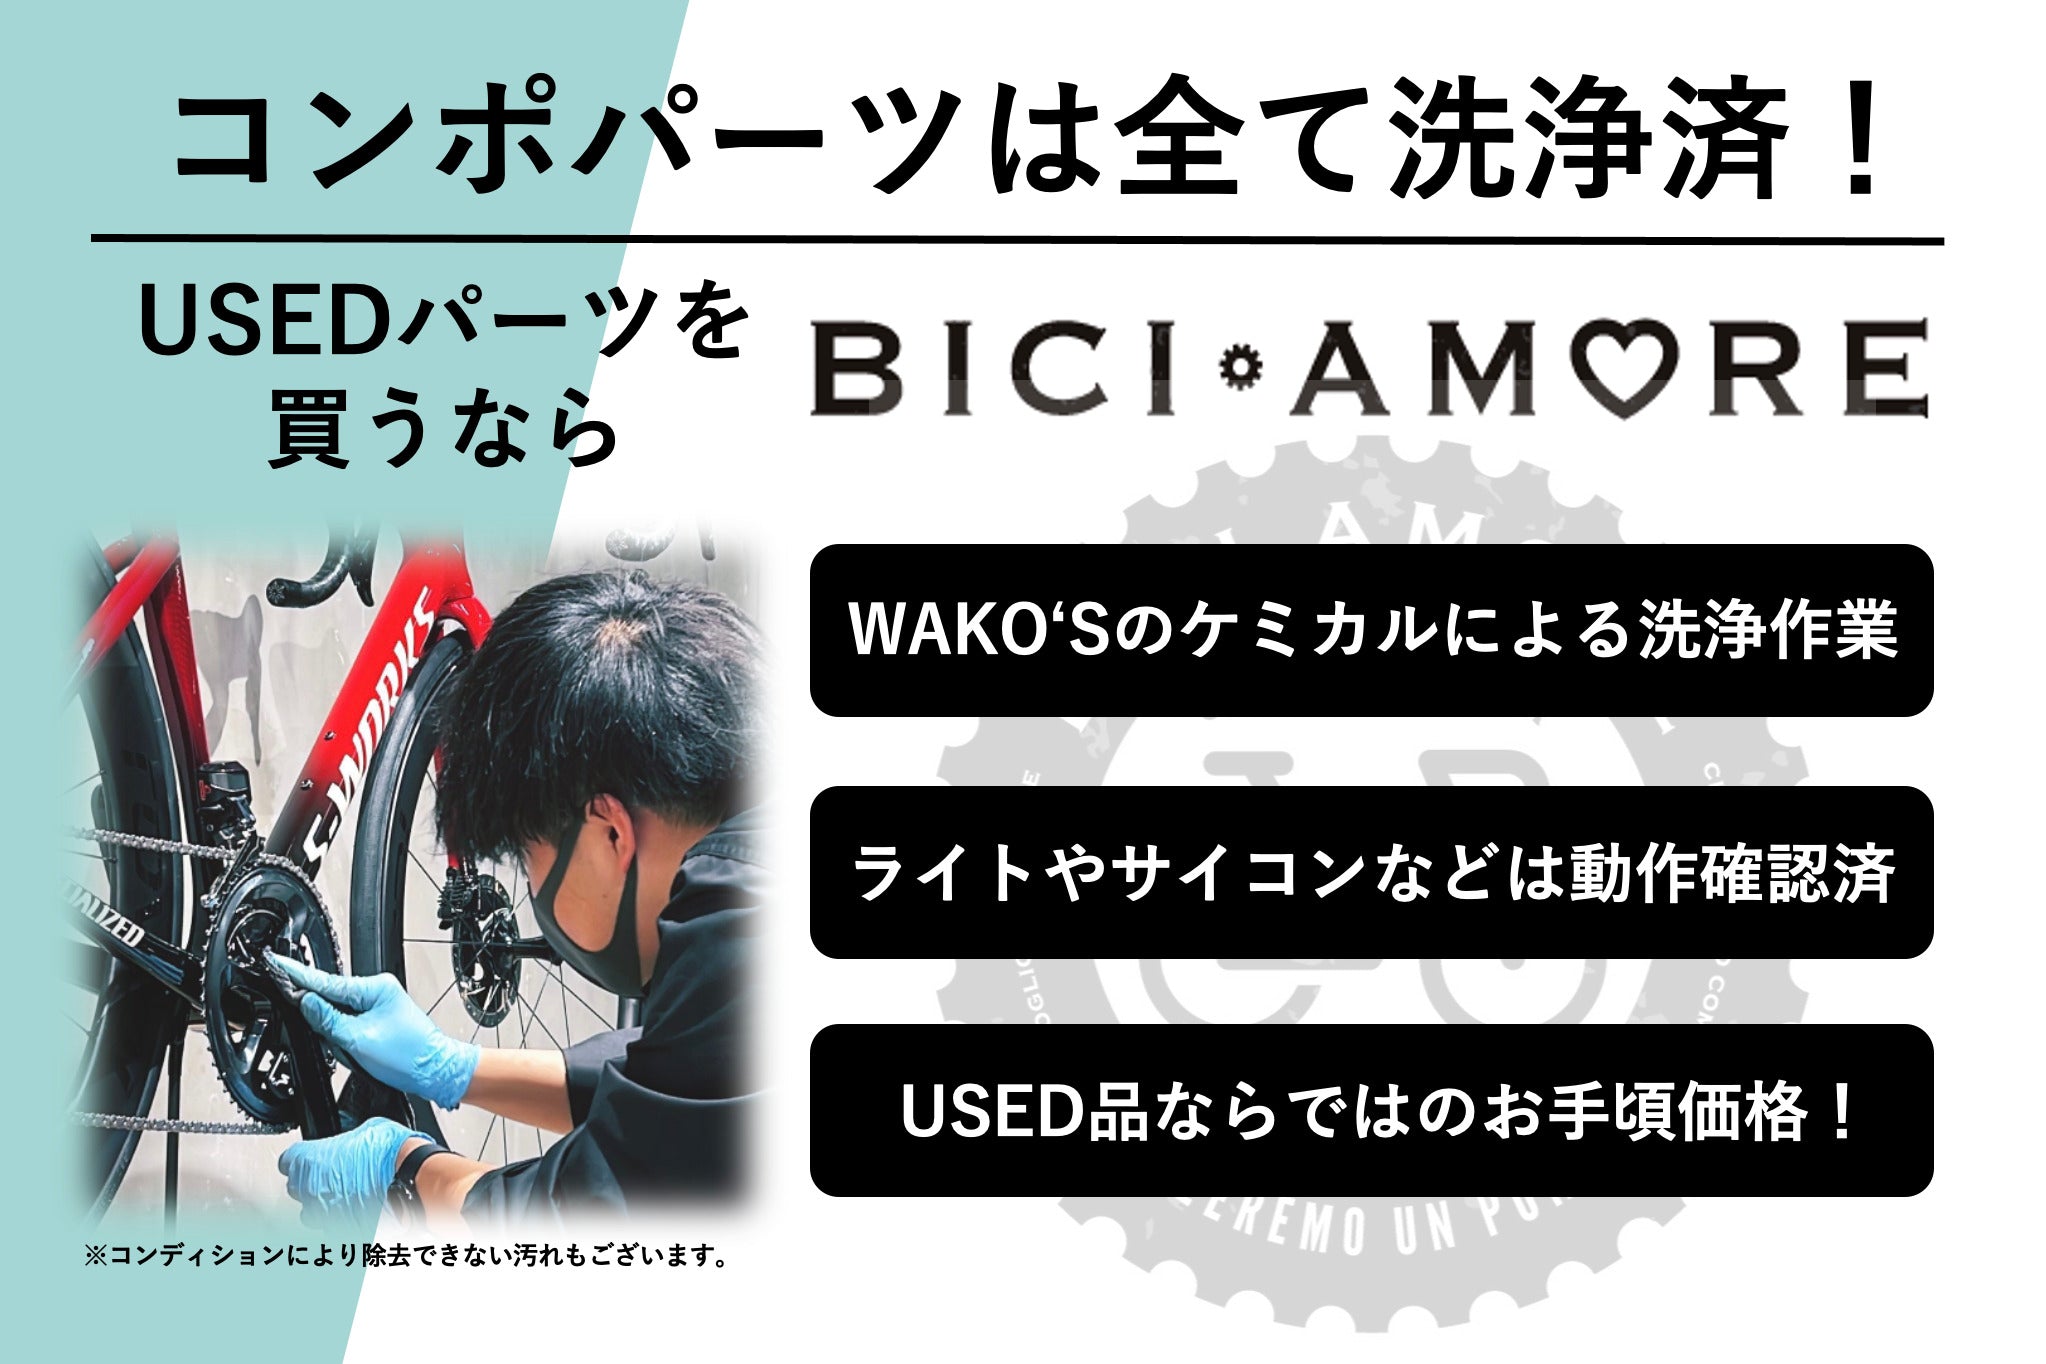 HC913 シマノ SHIMANO アルテグラ ULTEGRA PD-6800 ビンディングペダル 